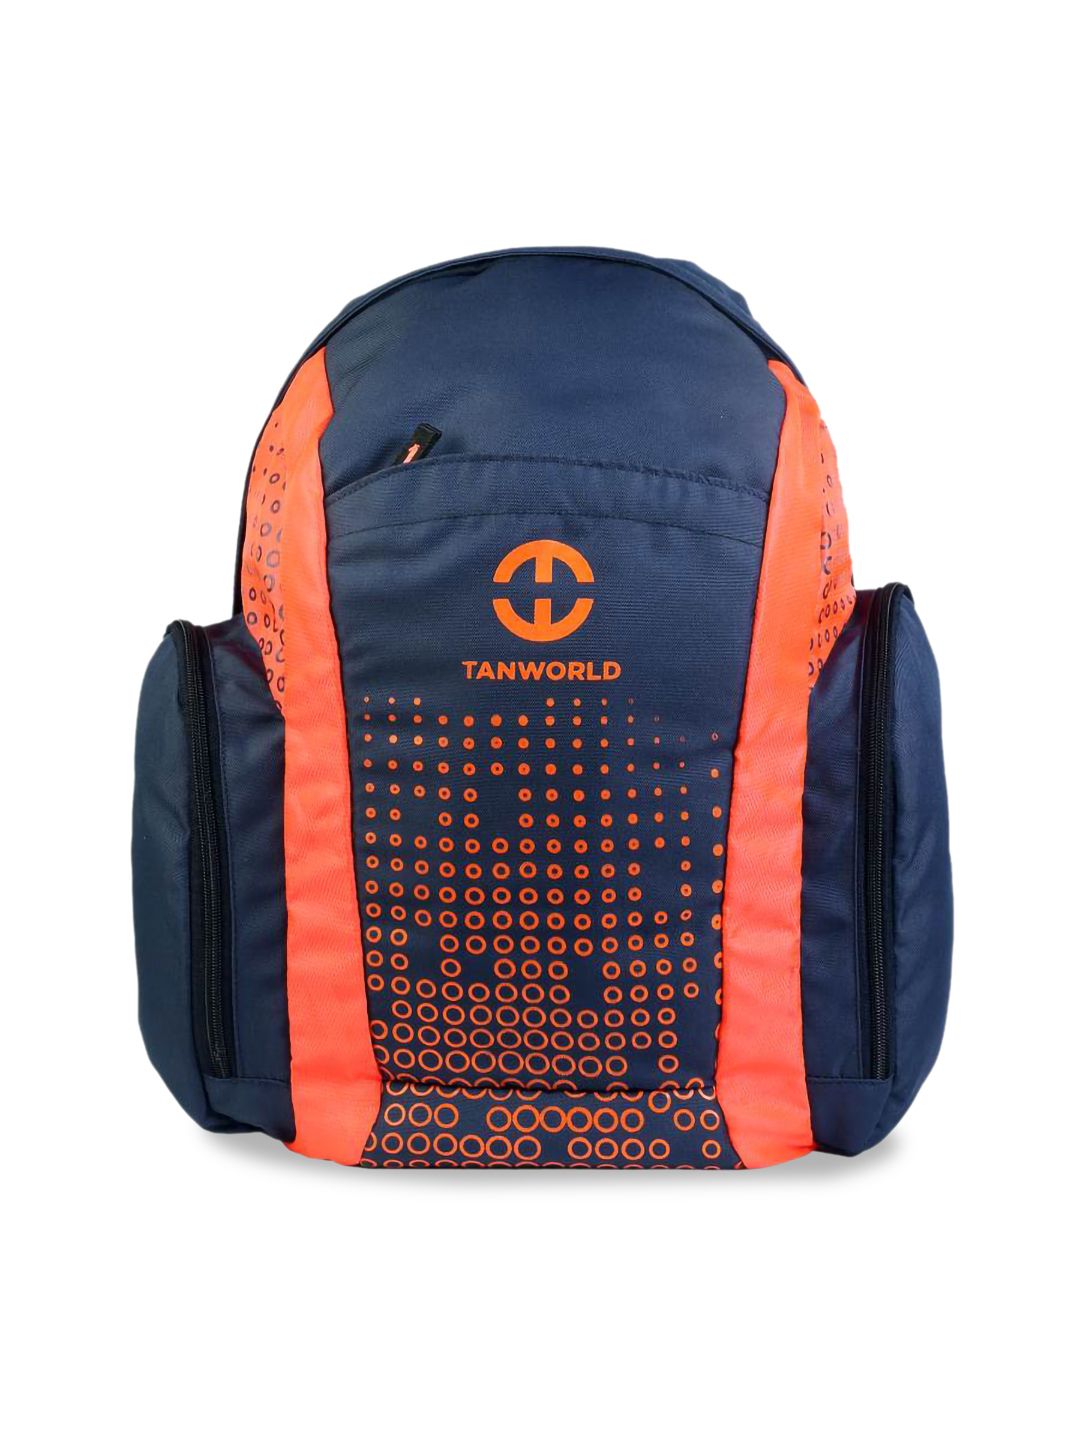 TAN WORLD Unisex Navy Blue & Orange Colourblocked Laptop Backpack Price in India